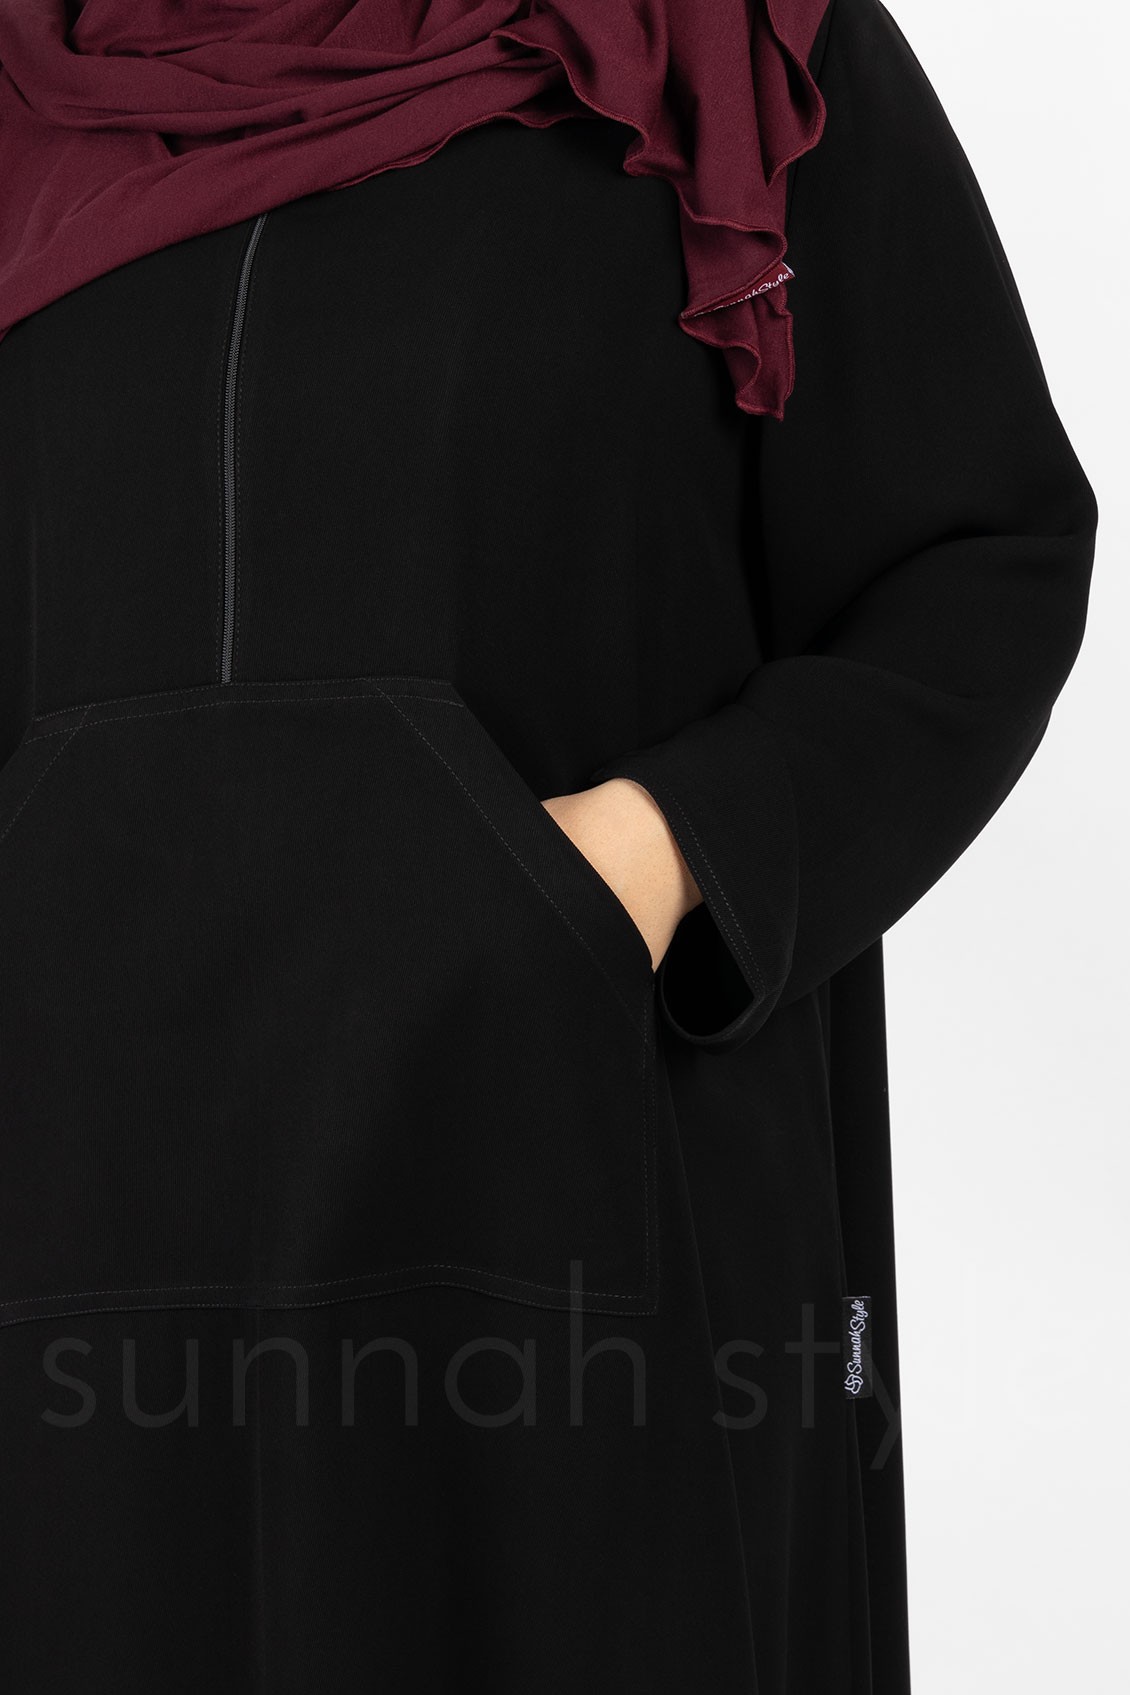 Sunnah Style Essentials Hooded Abaya Black